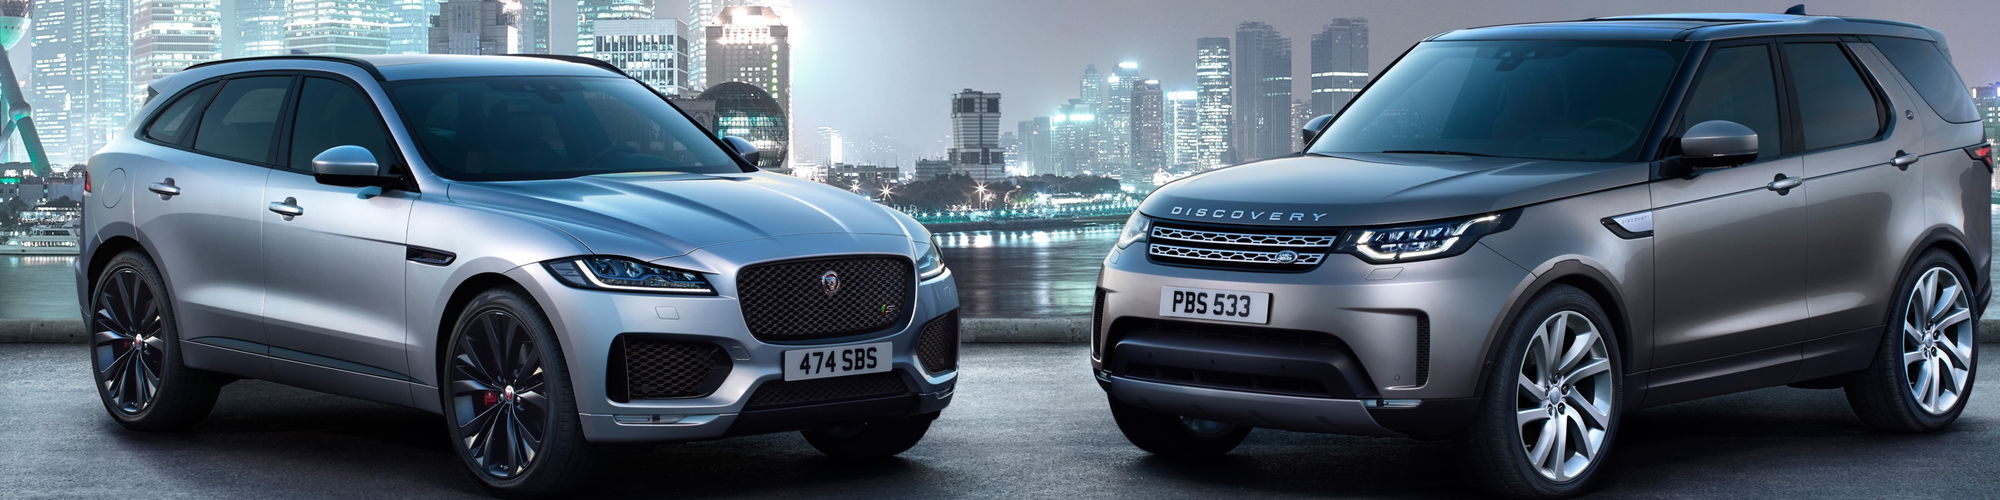 Jaguar Land Rover cover image